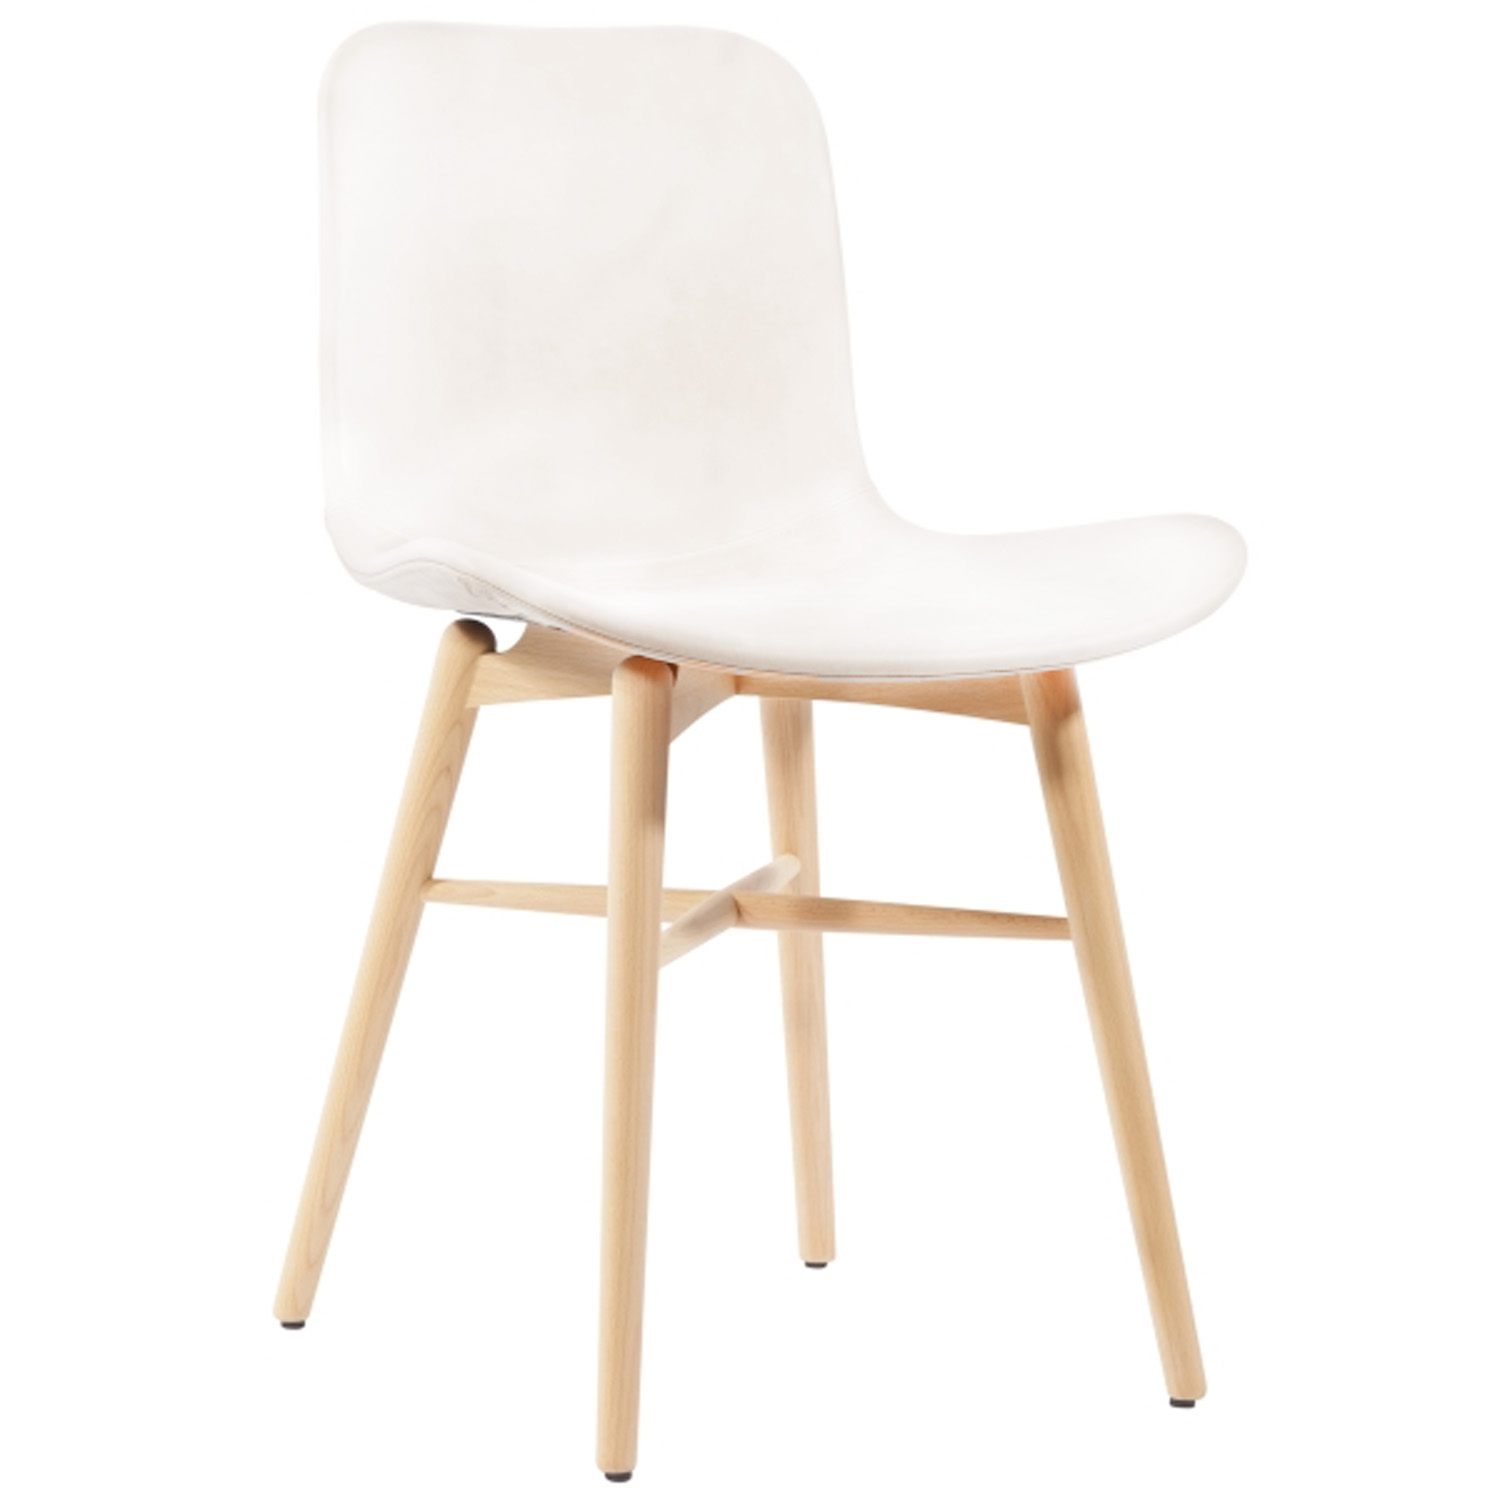 Výprodej Norr 11 designové židle Langue Original Dining Chair (dub, krémová kůže)